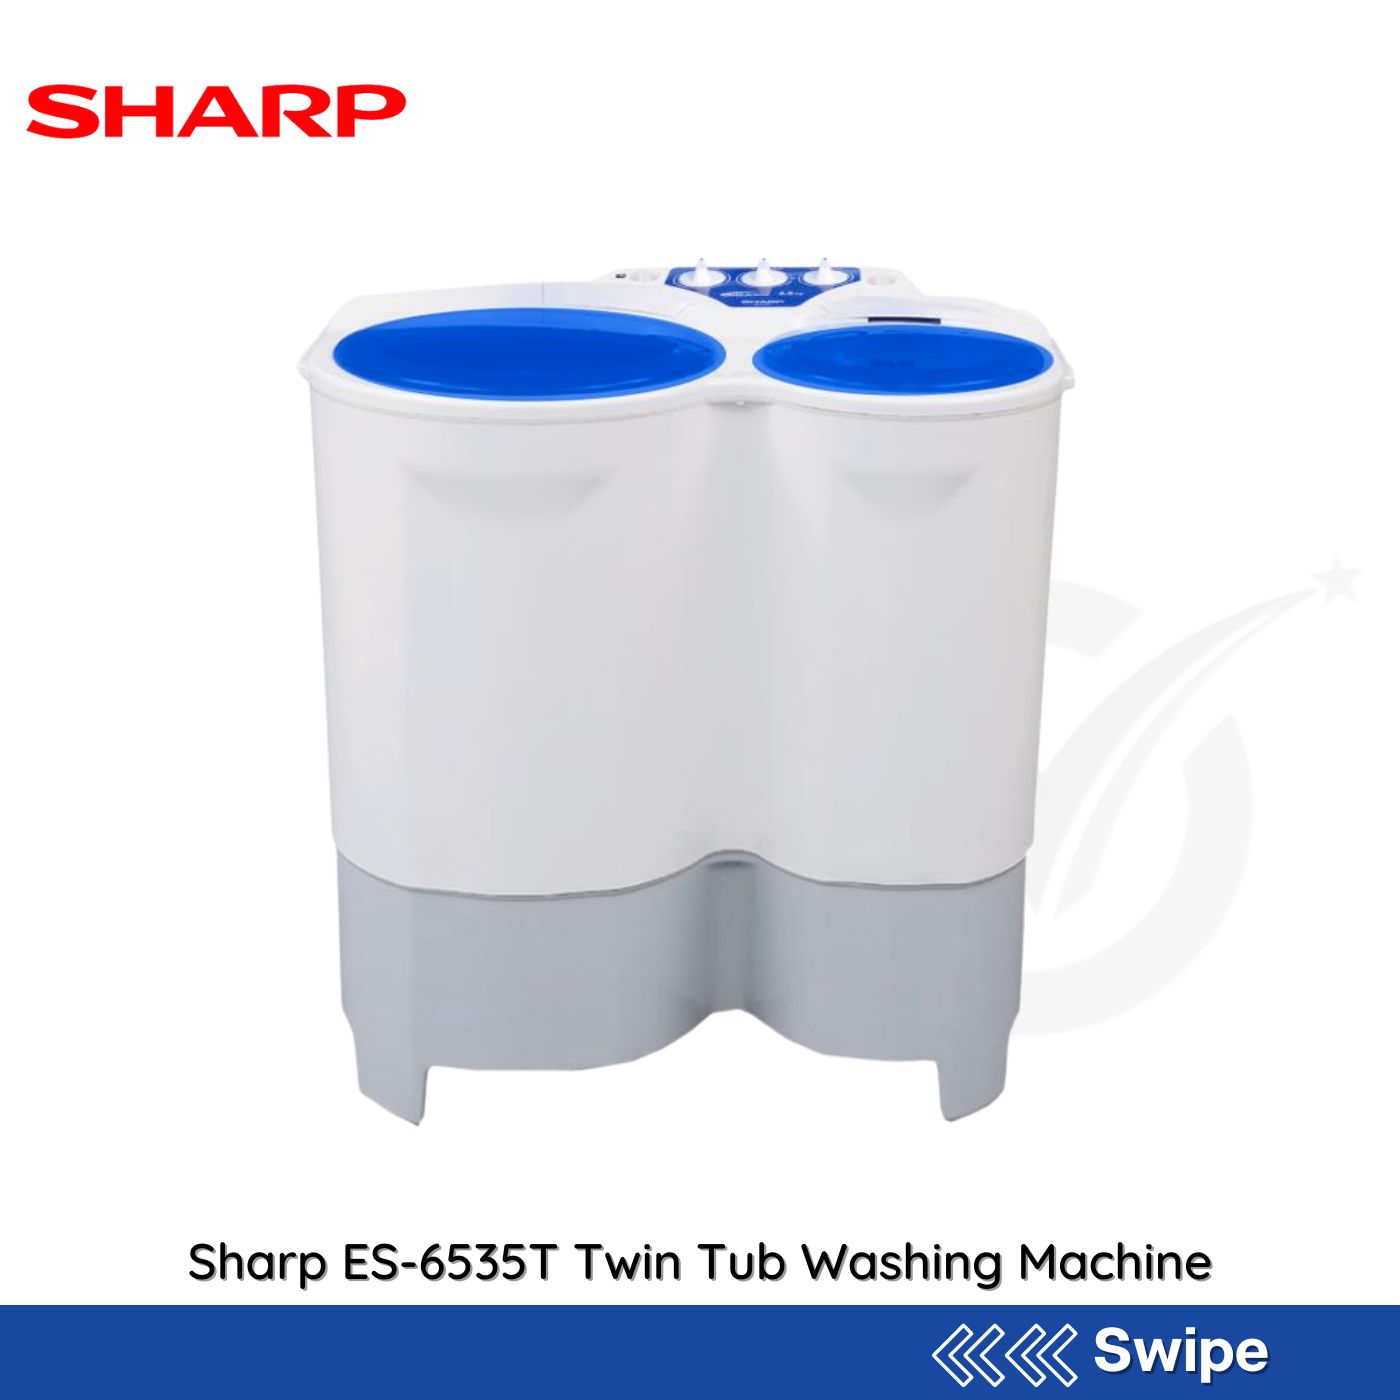 Sharp ES-6535T Twin Tub Washing Machine - People's Choice Marketing